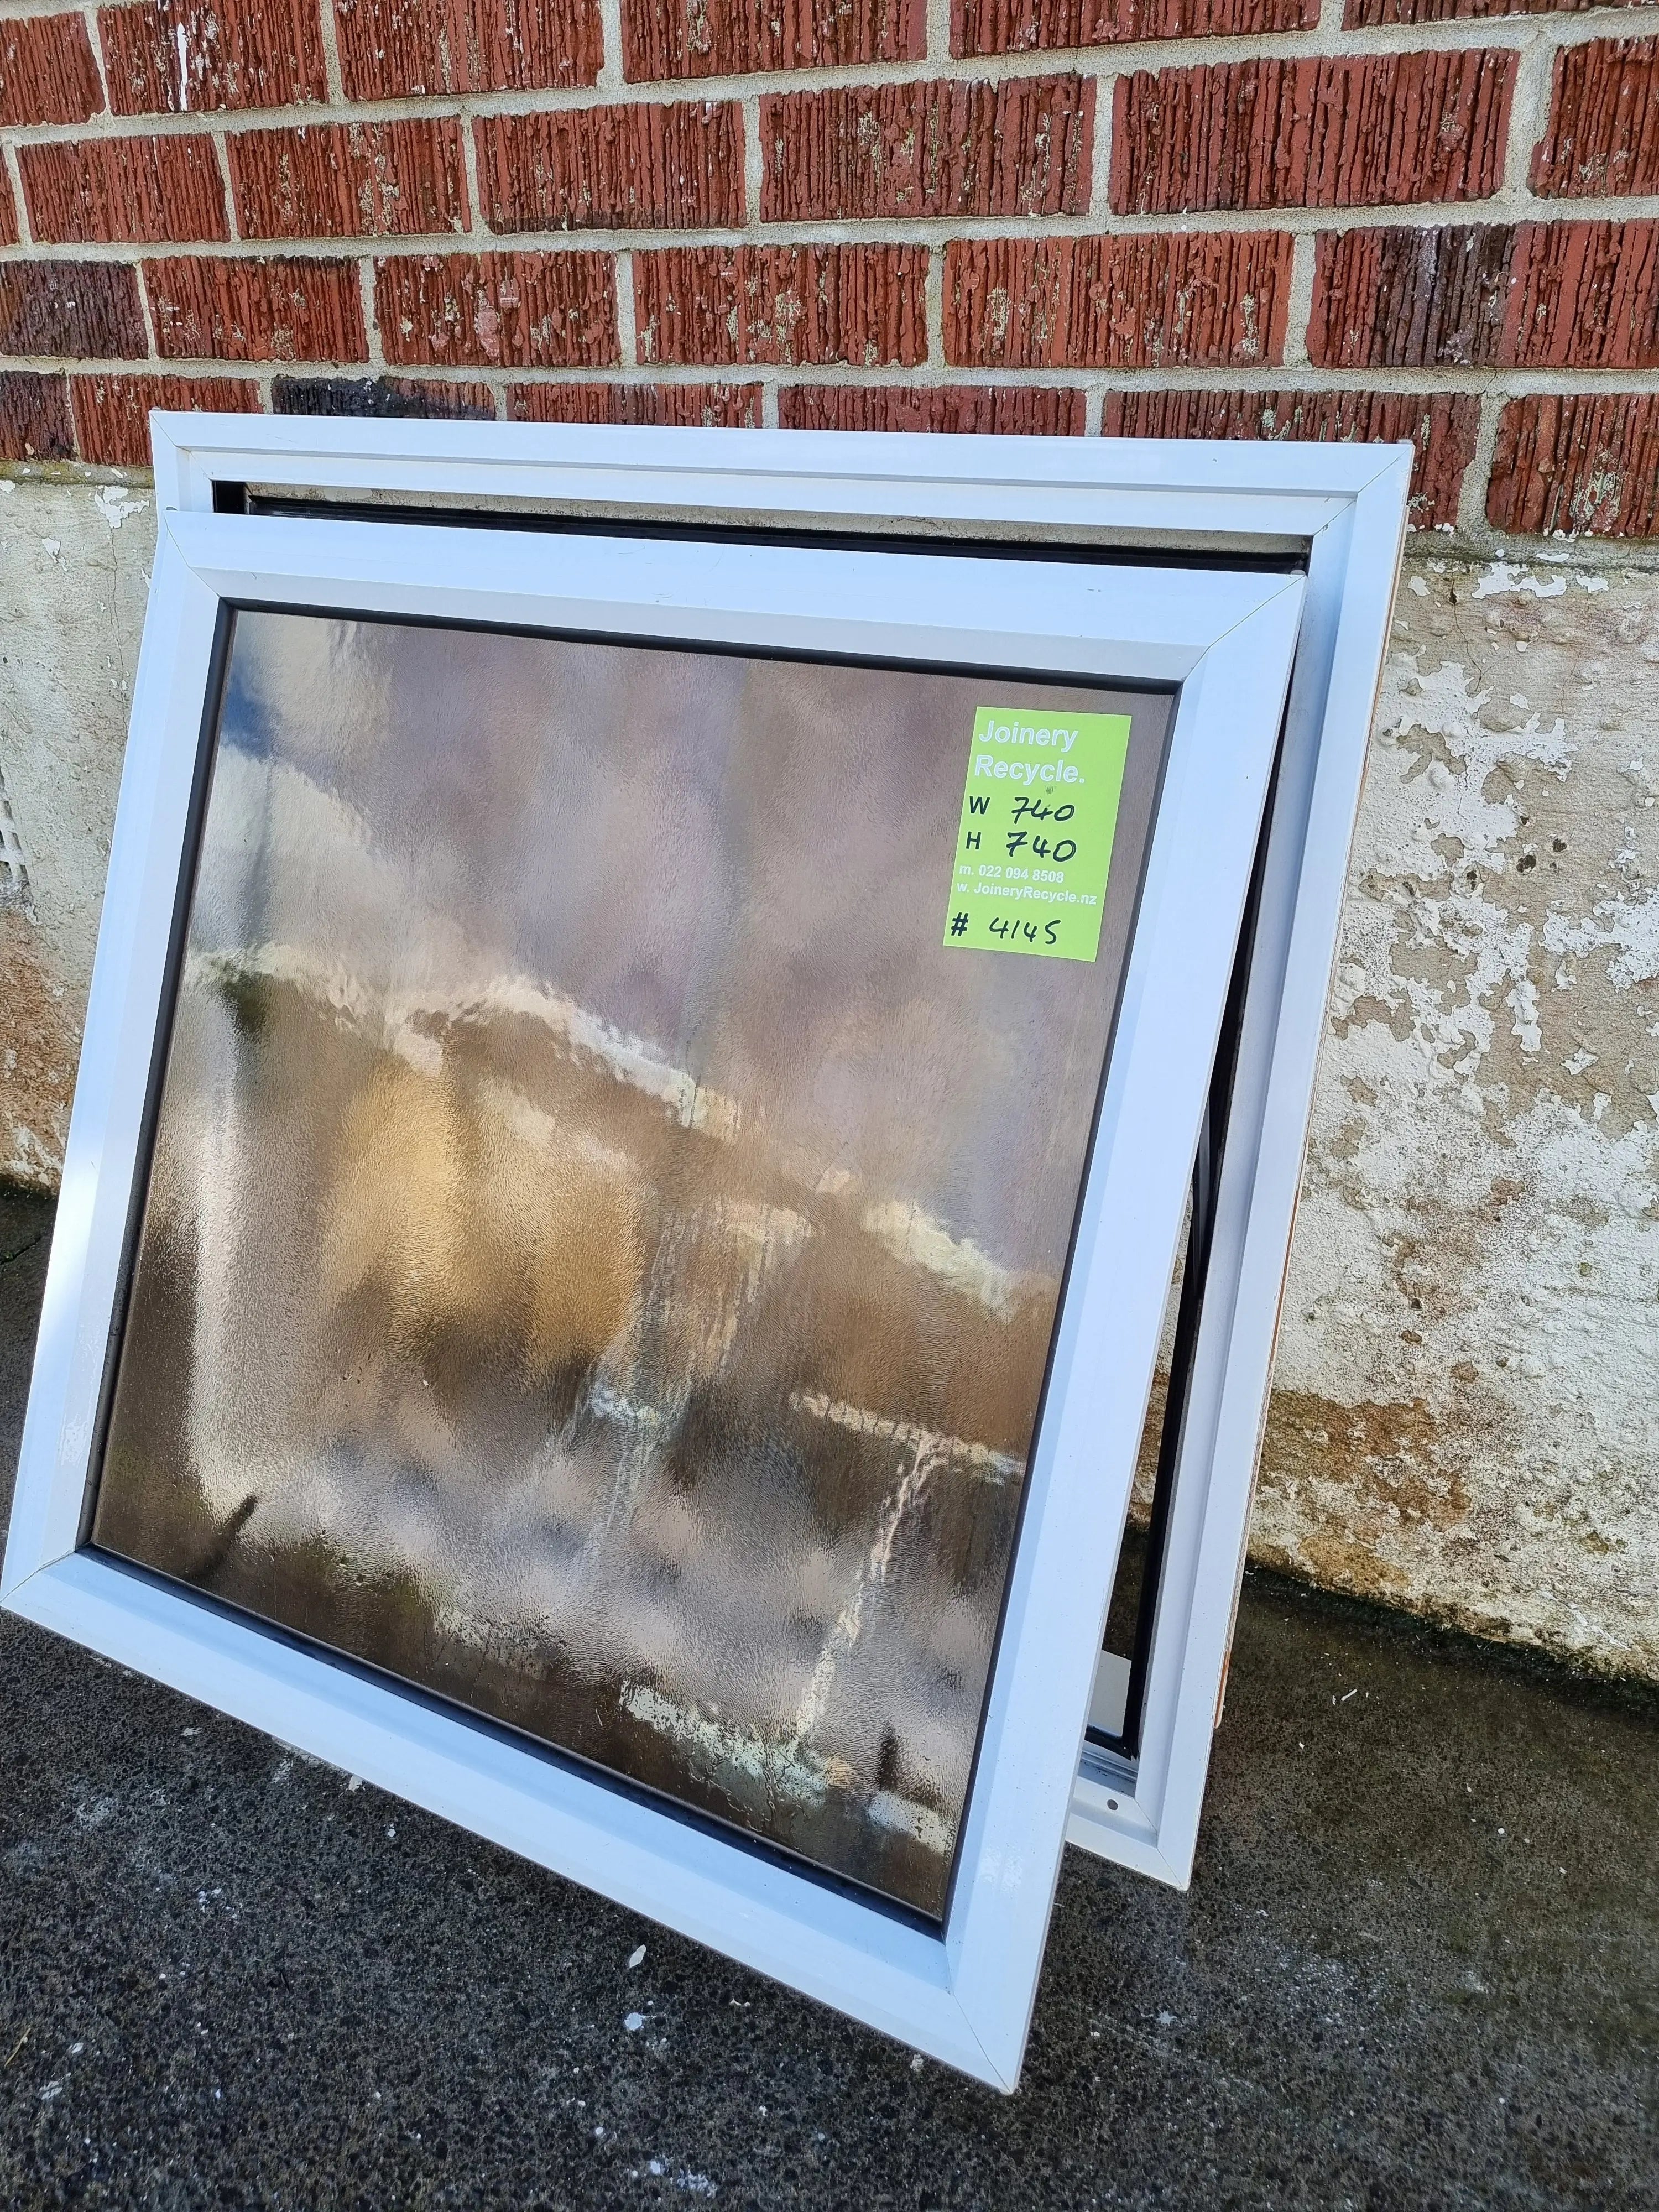 Aluminium Window White  740 W x 740 H  [#4145 MA] Joinery Recycle